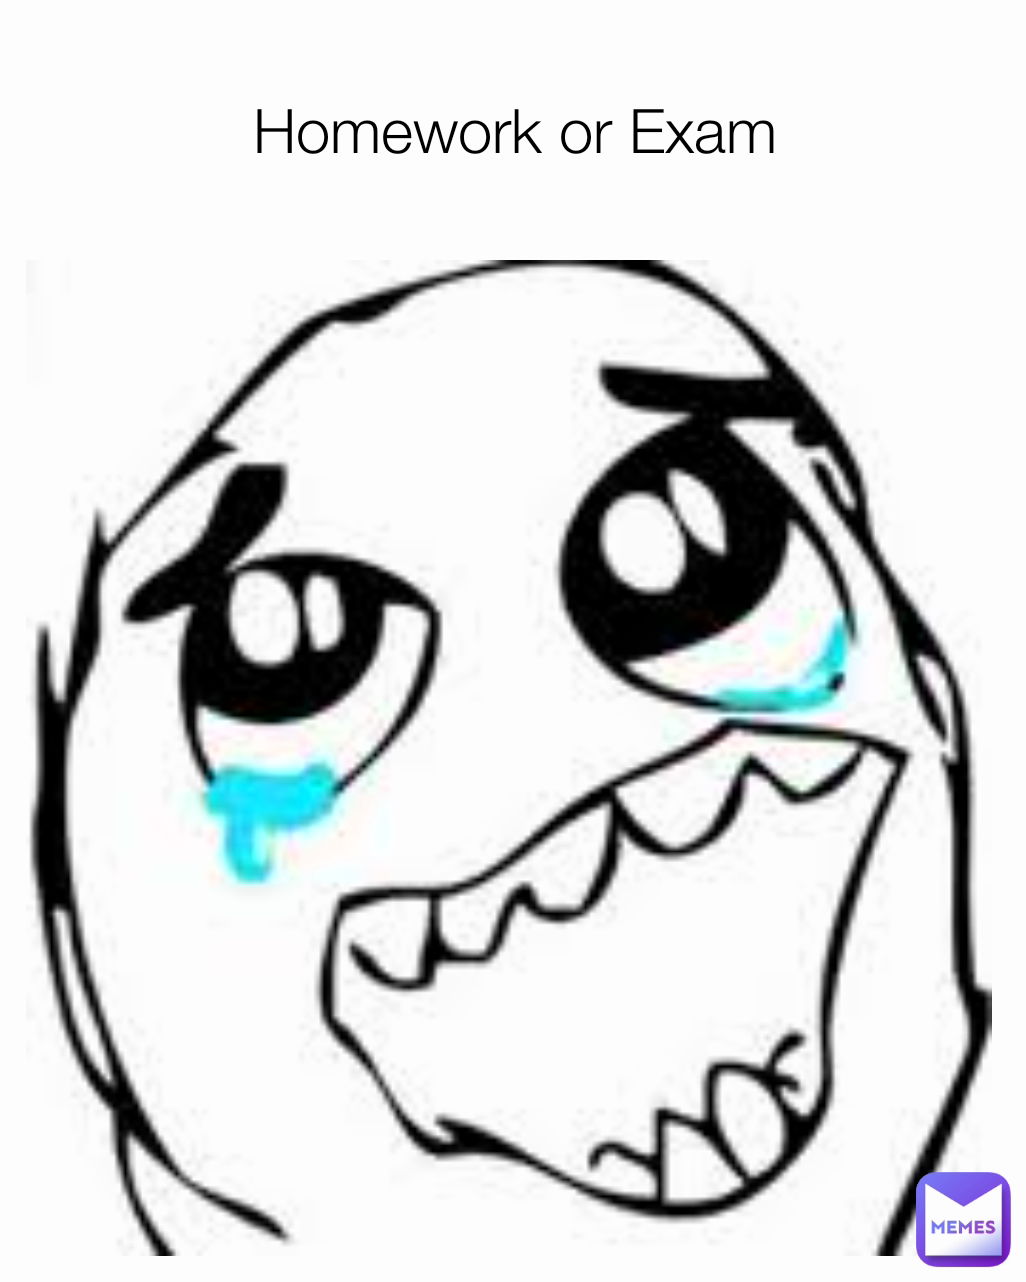 Homework or Exam